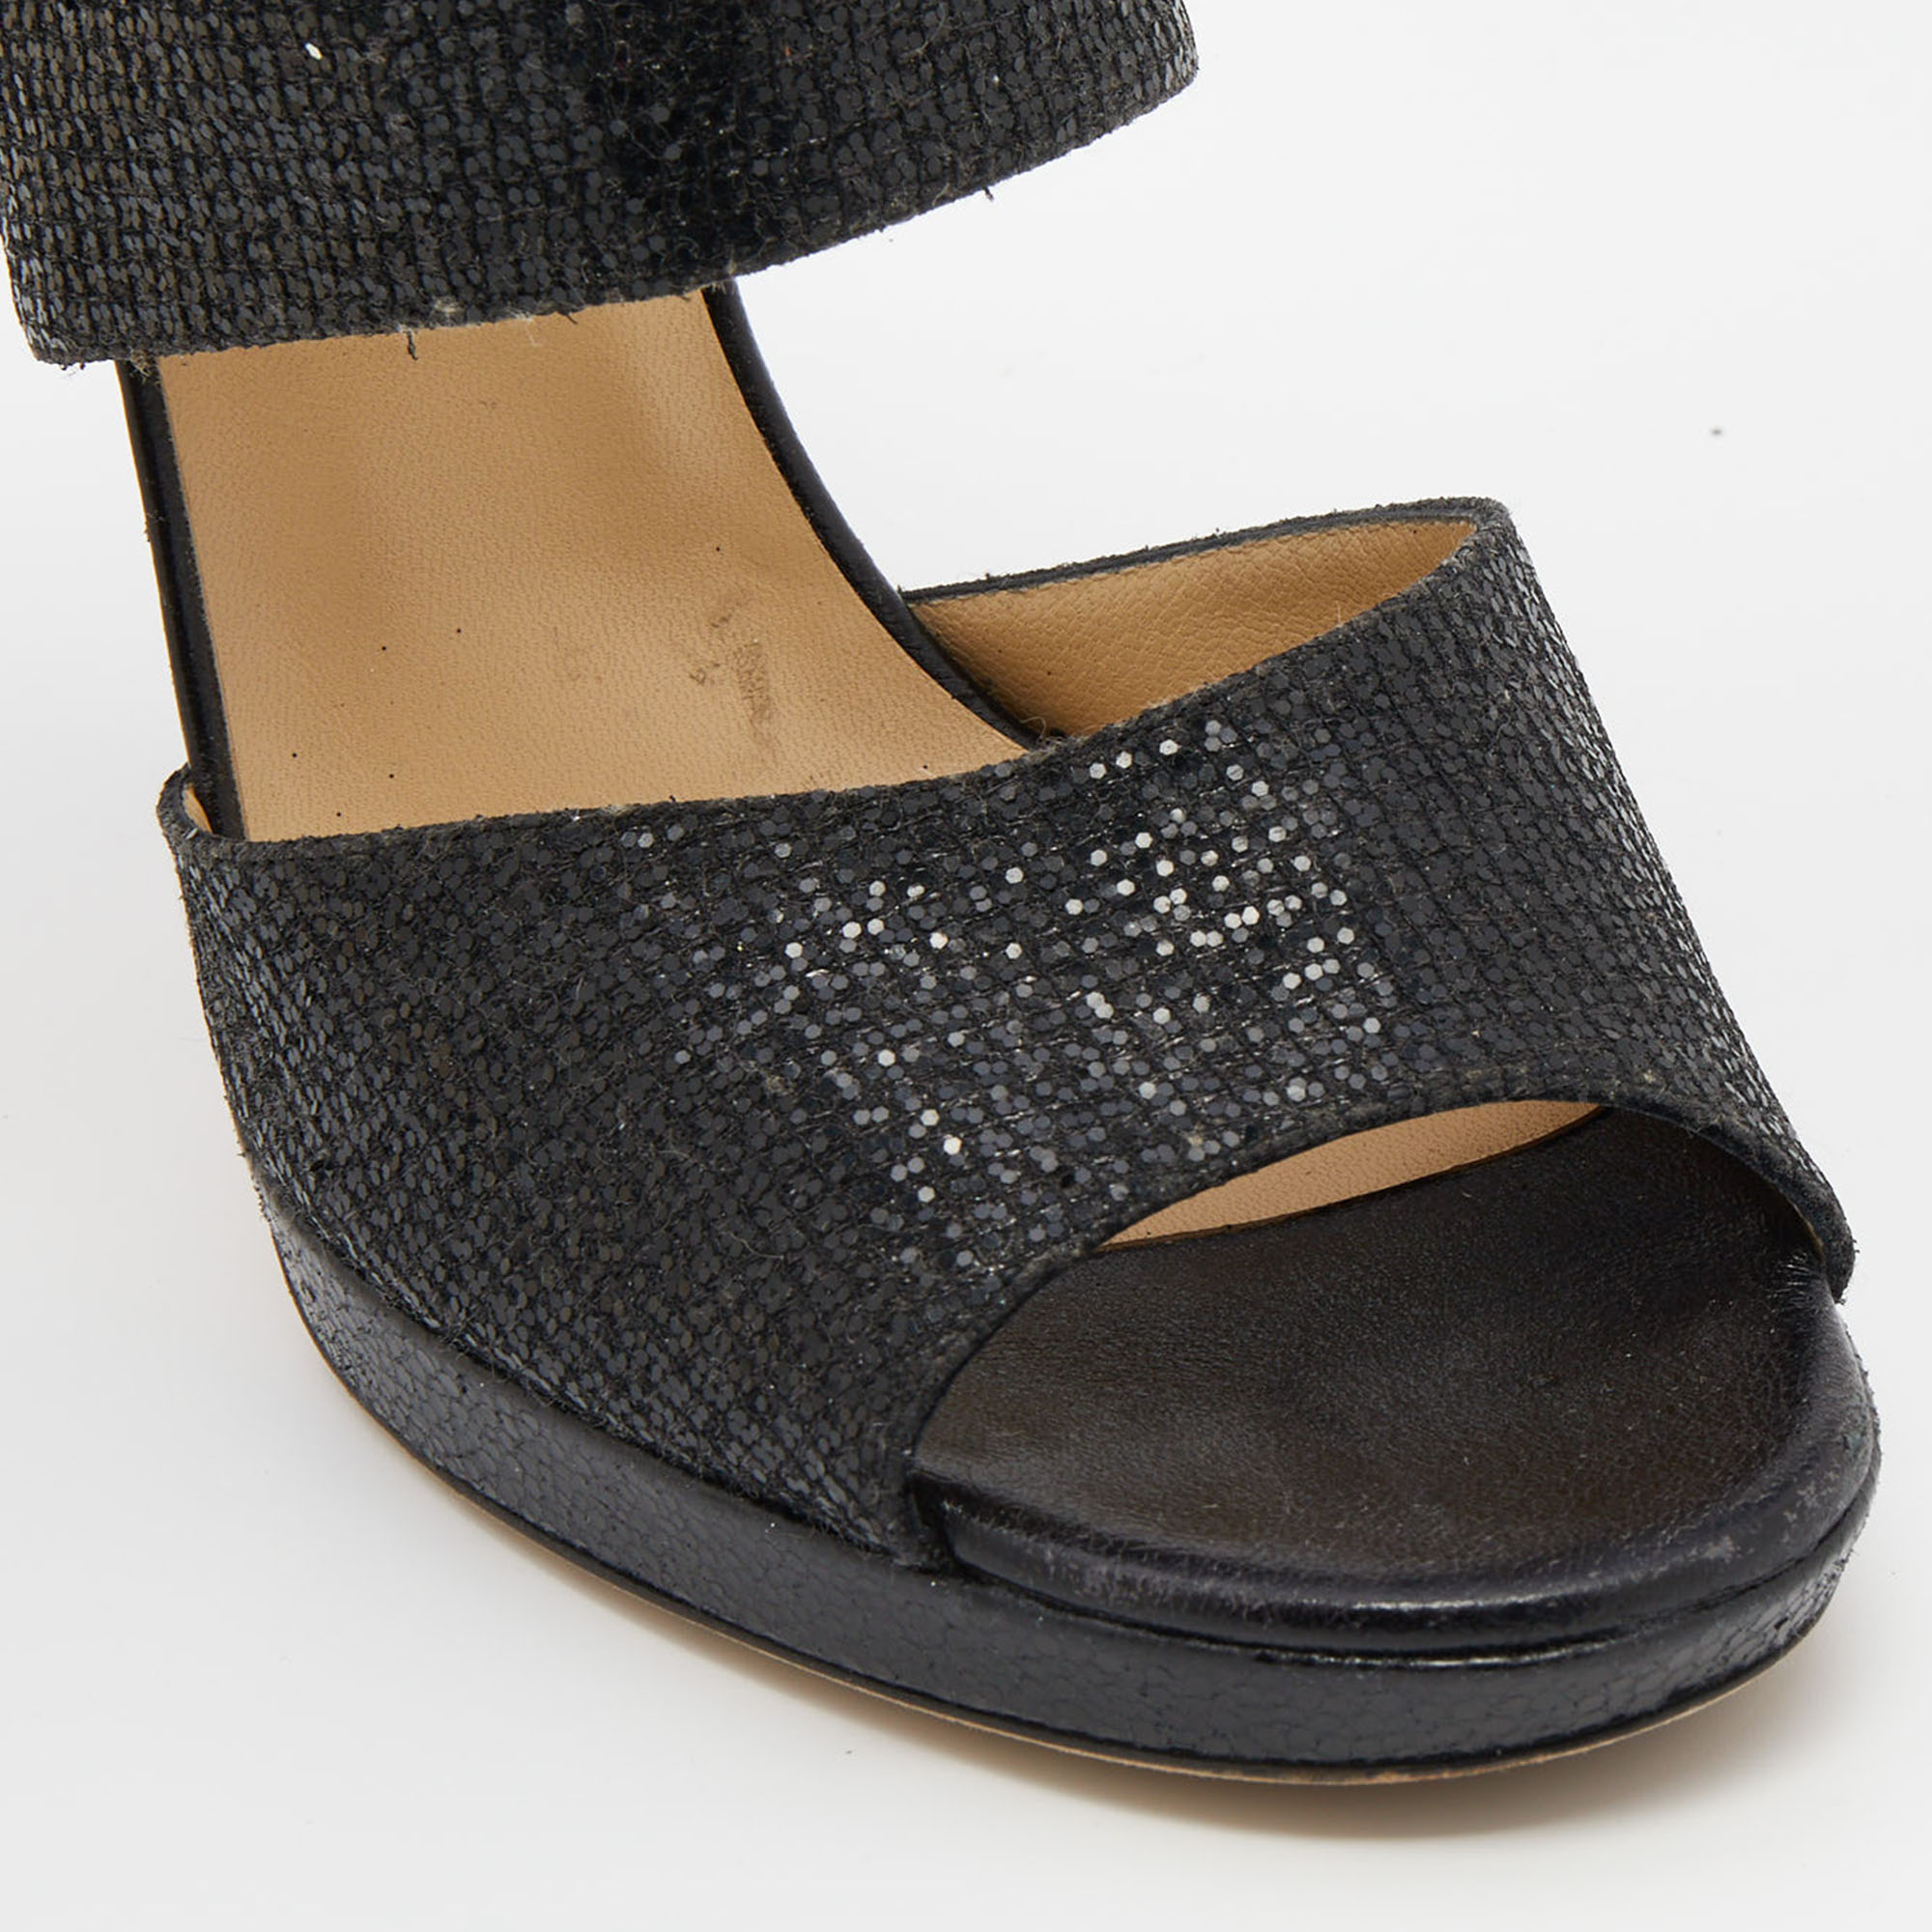 Jimmy Choo Black Glitter Private Platform Sandals Size 39